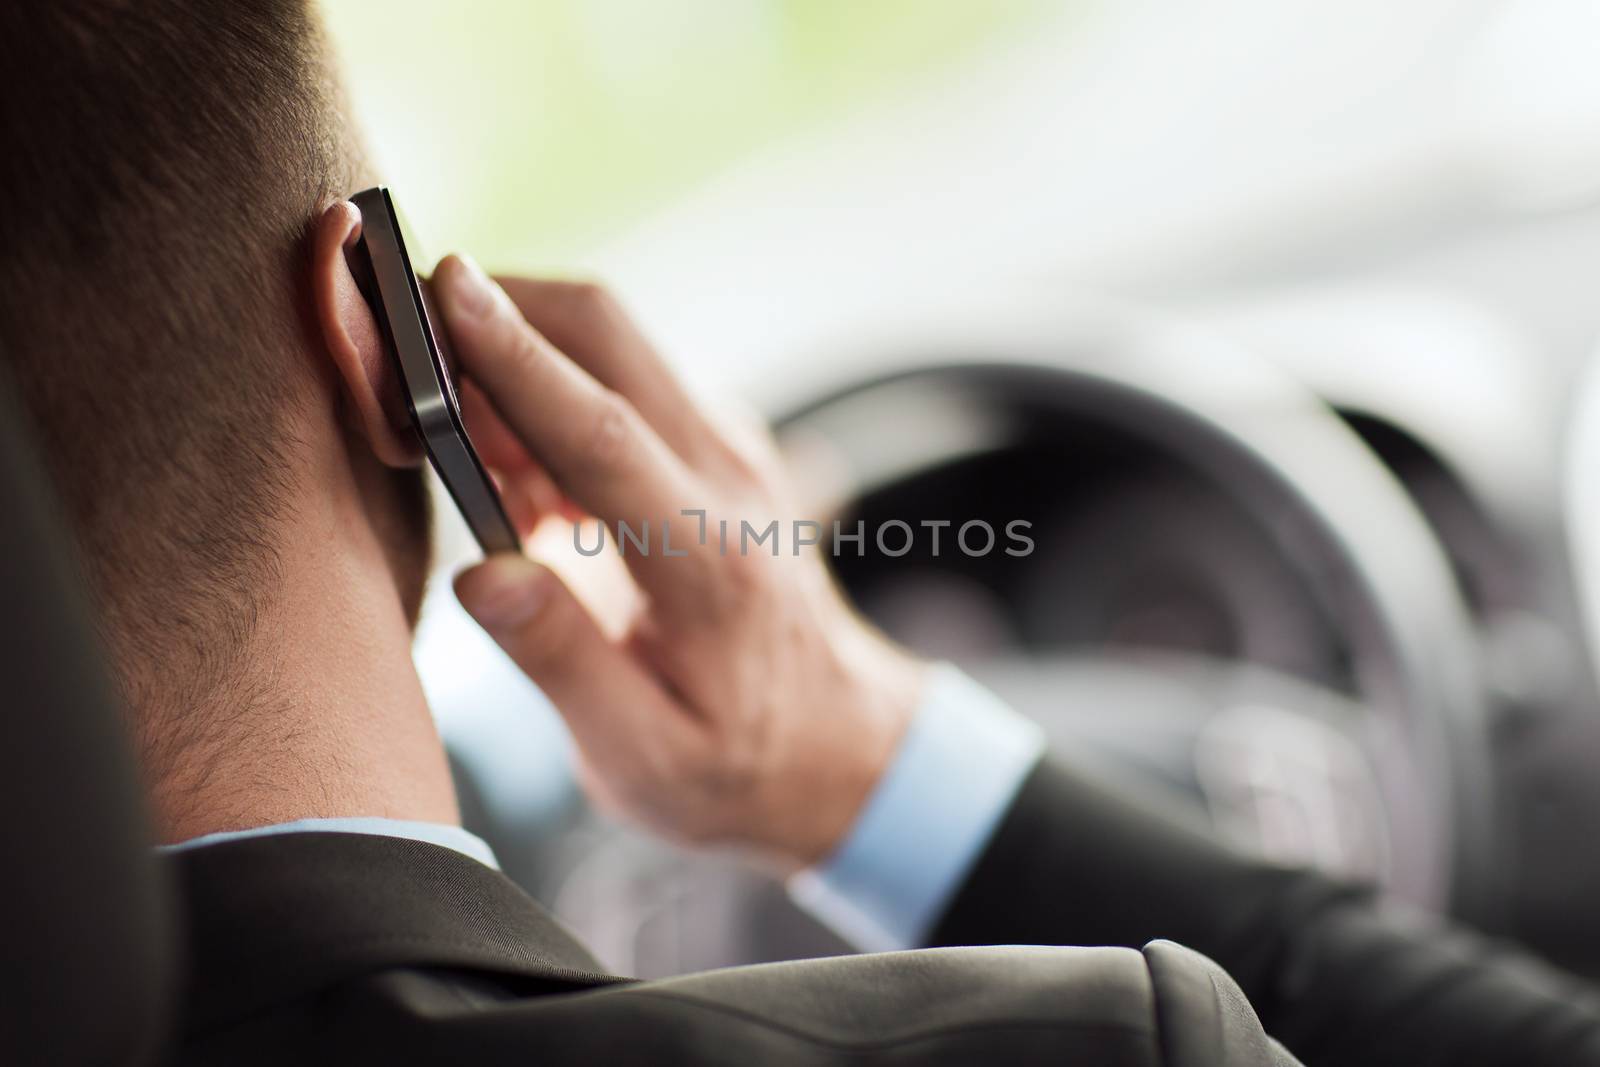 man using phone while driving the car by dolgachov